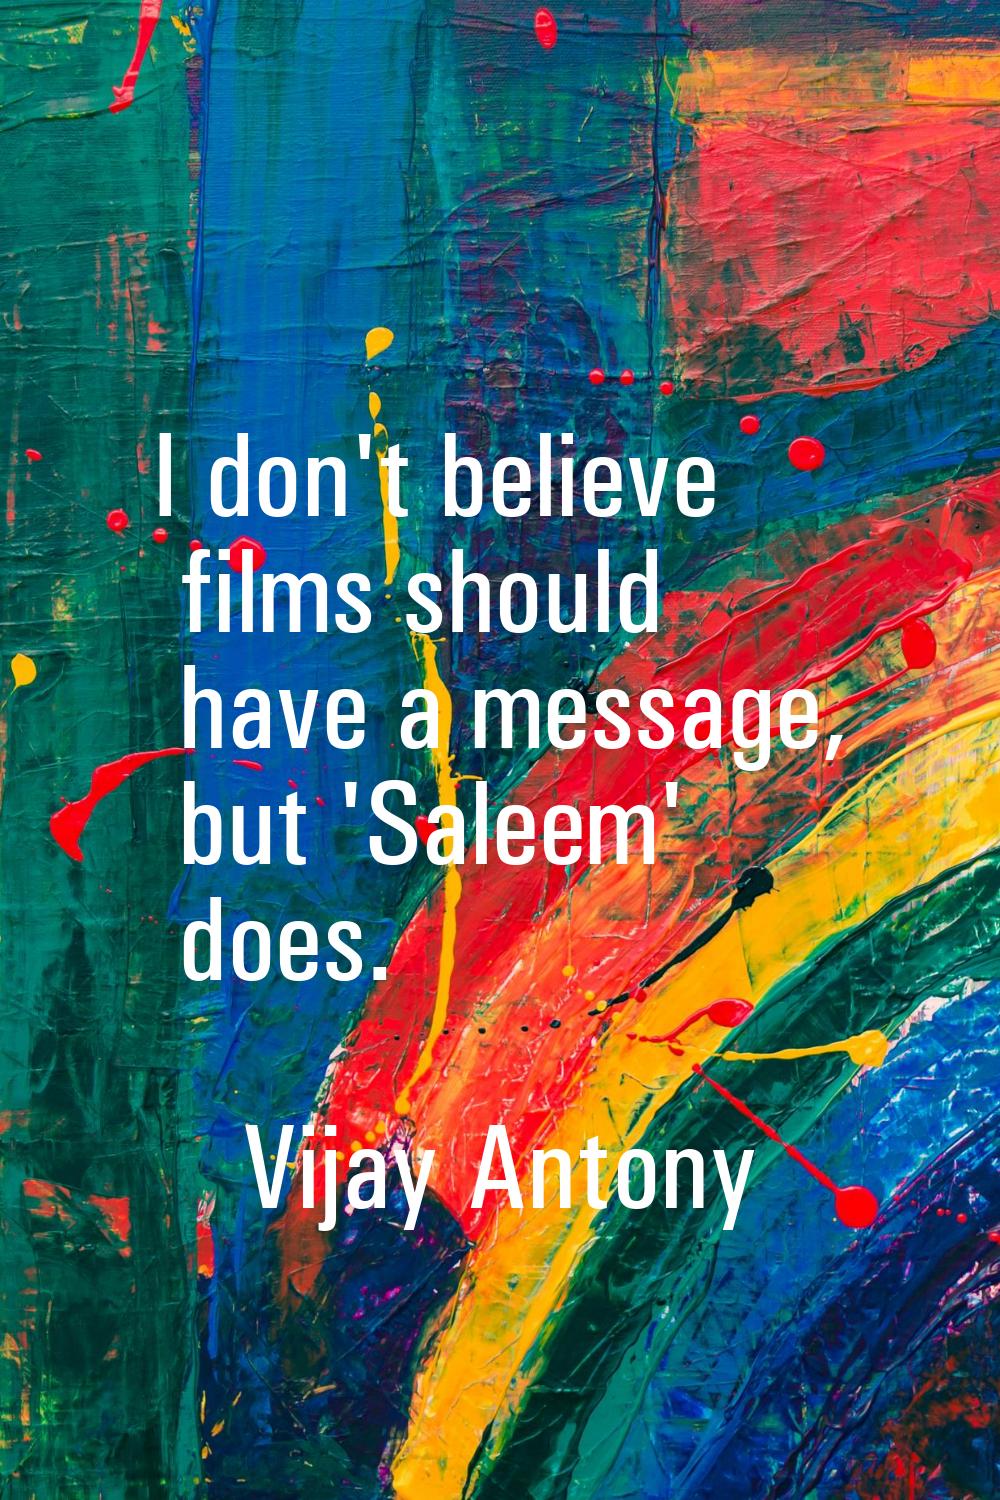 I don't believe films should have a message, but 'Saleem' does.